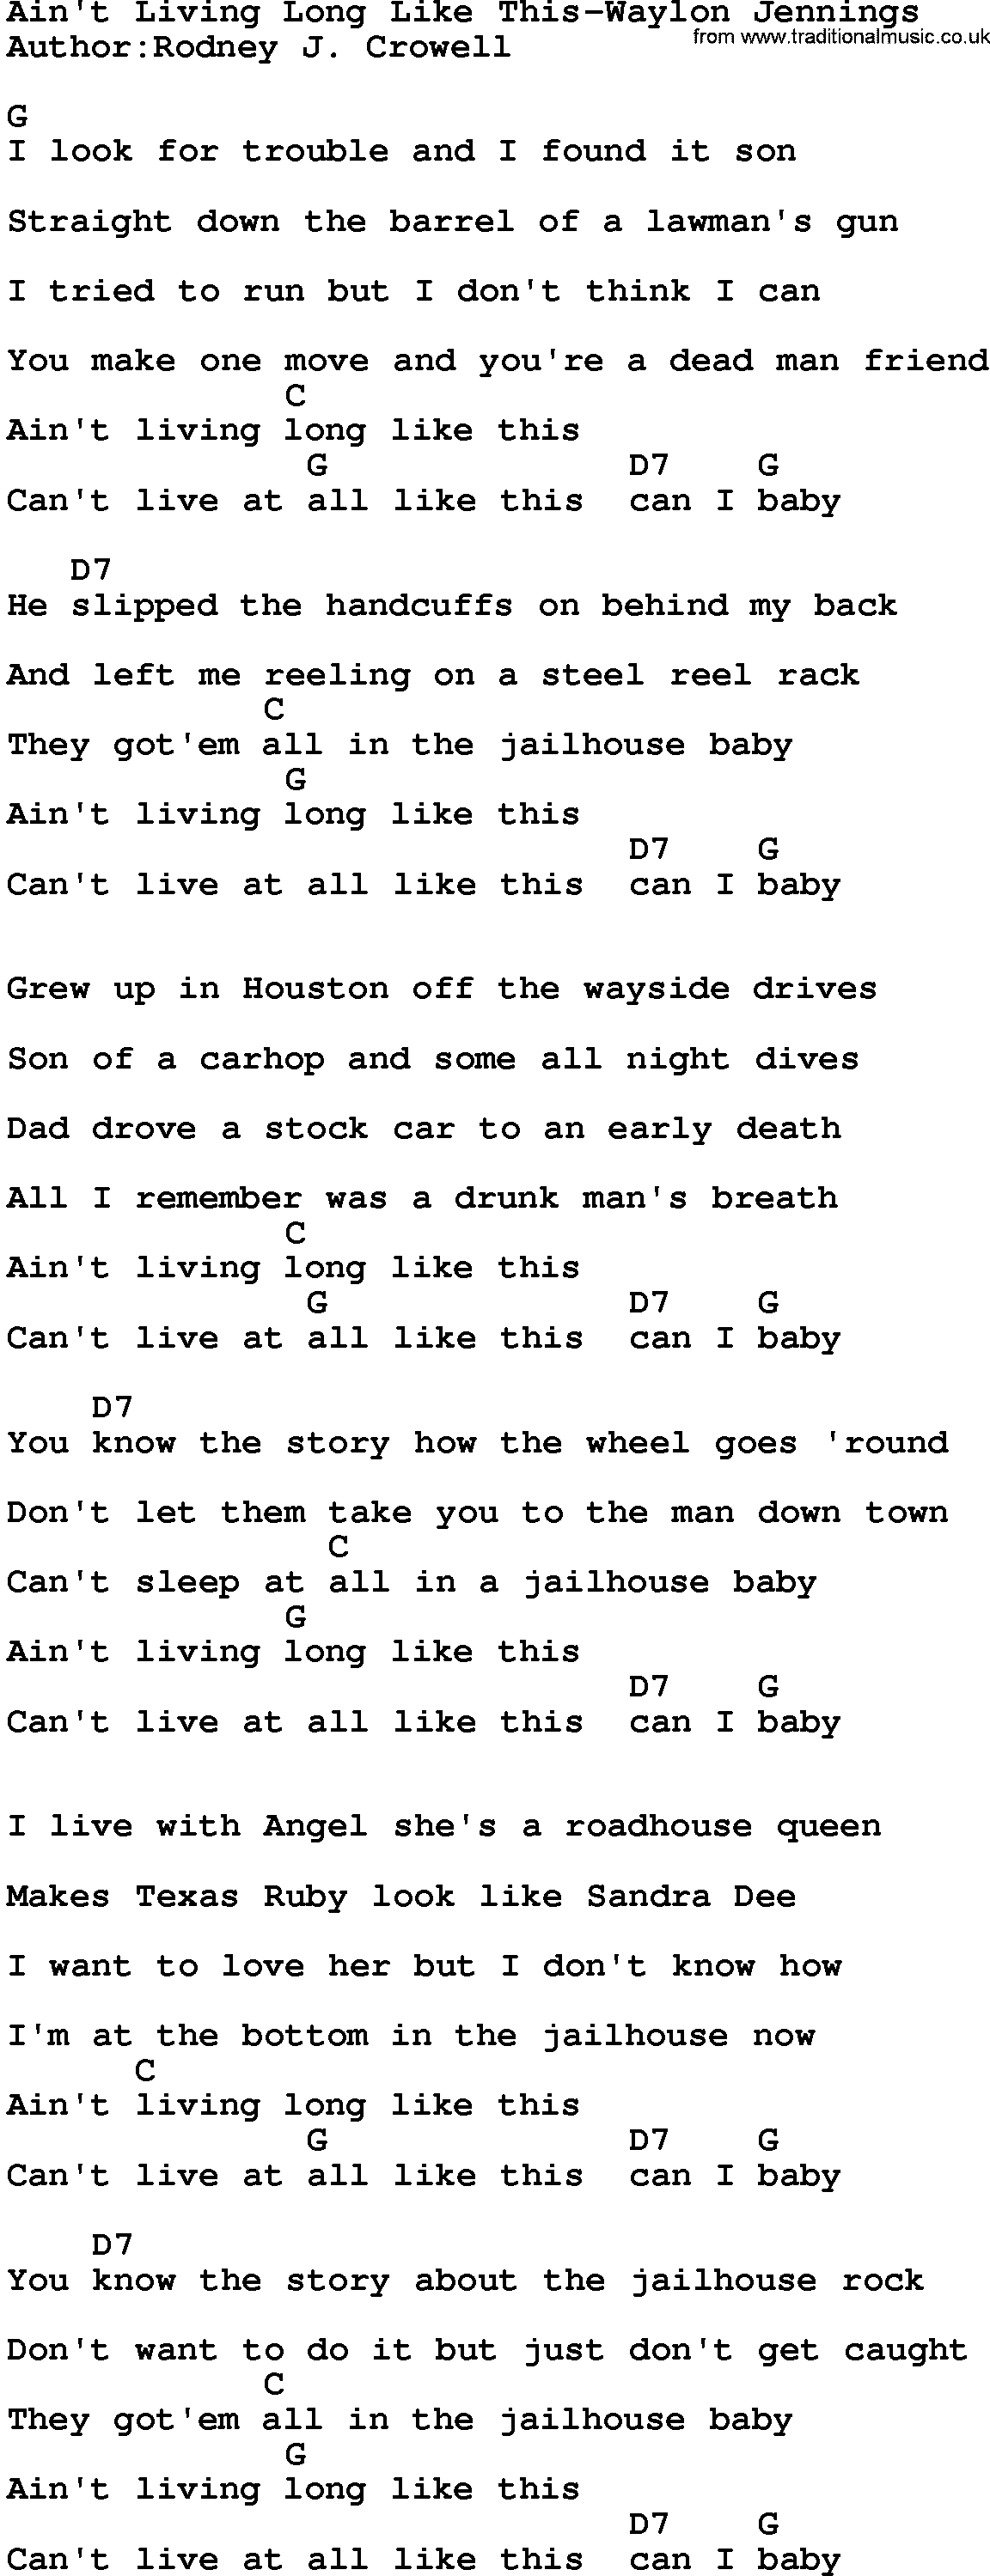 Country music song: Ain't Living Long Like This-Waylon Jennings lyrics and chords